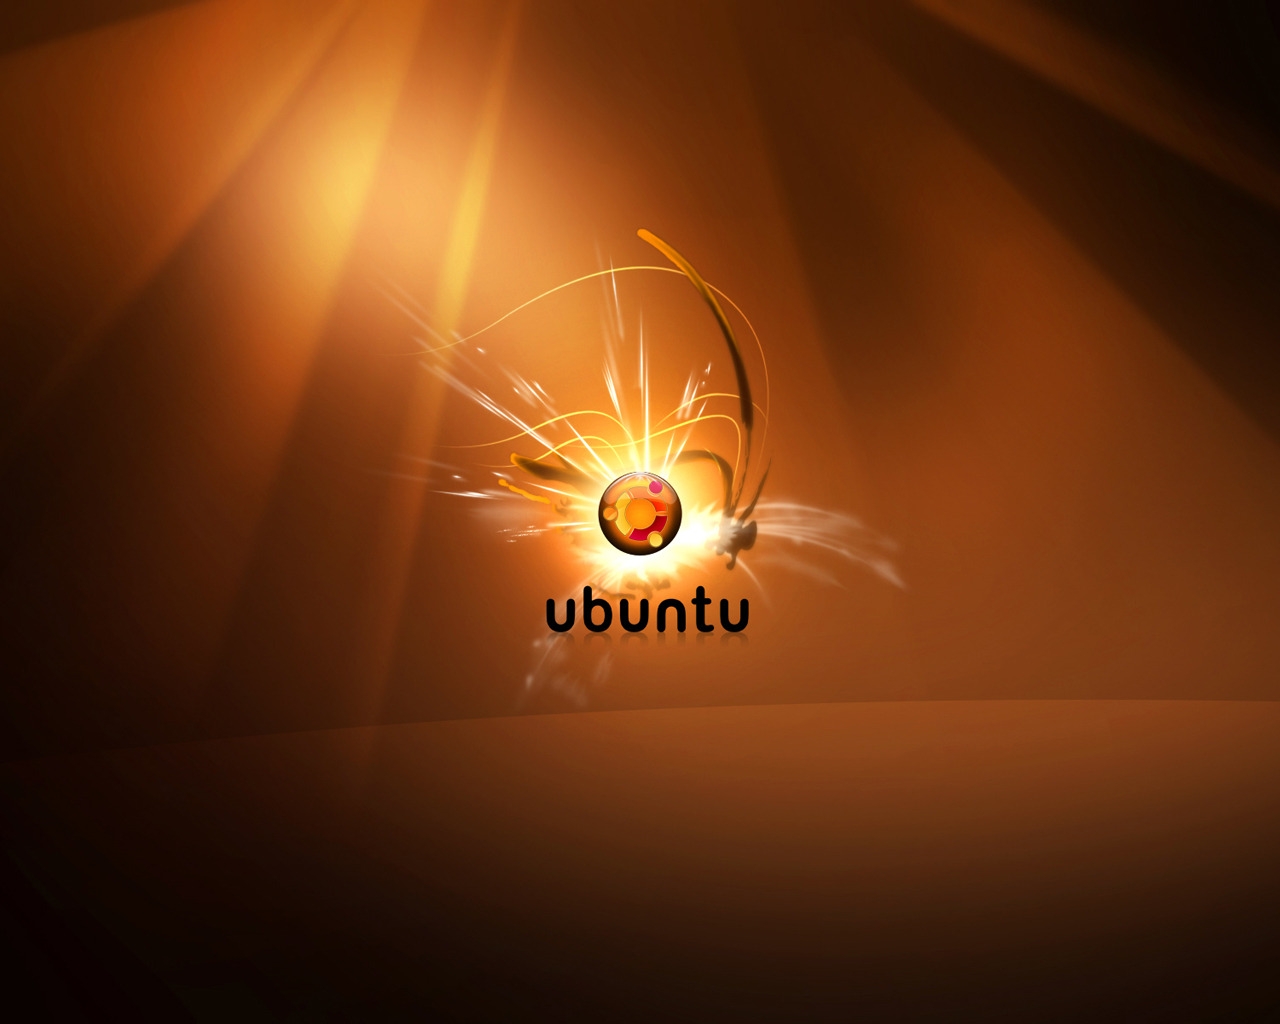 Creative Ubuntu Design for 1280 x 1024 resolution